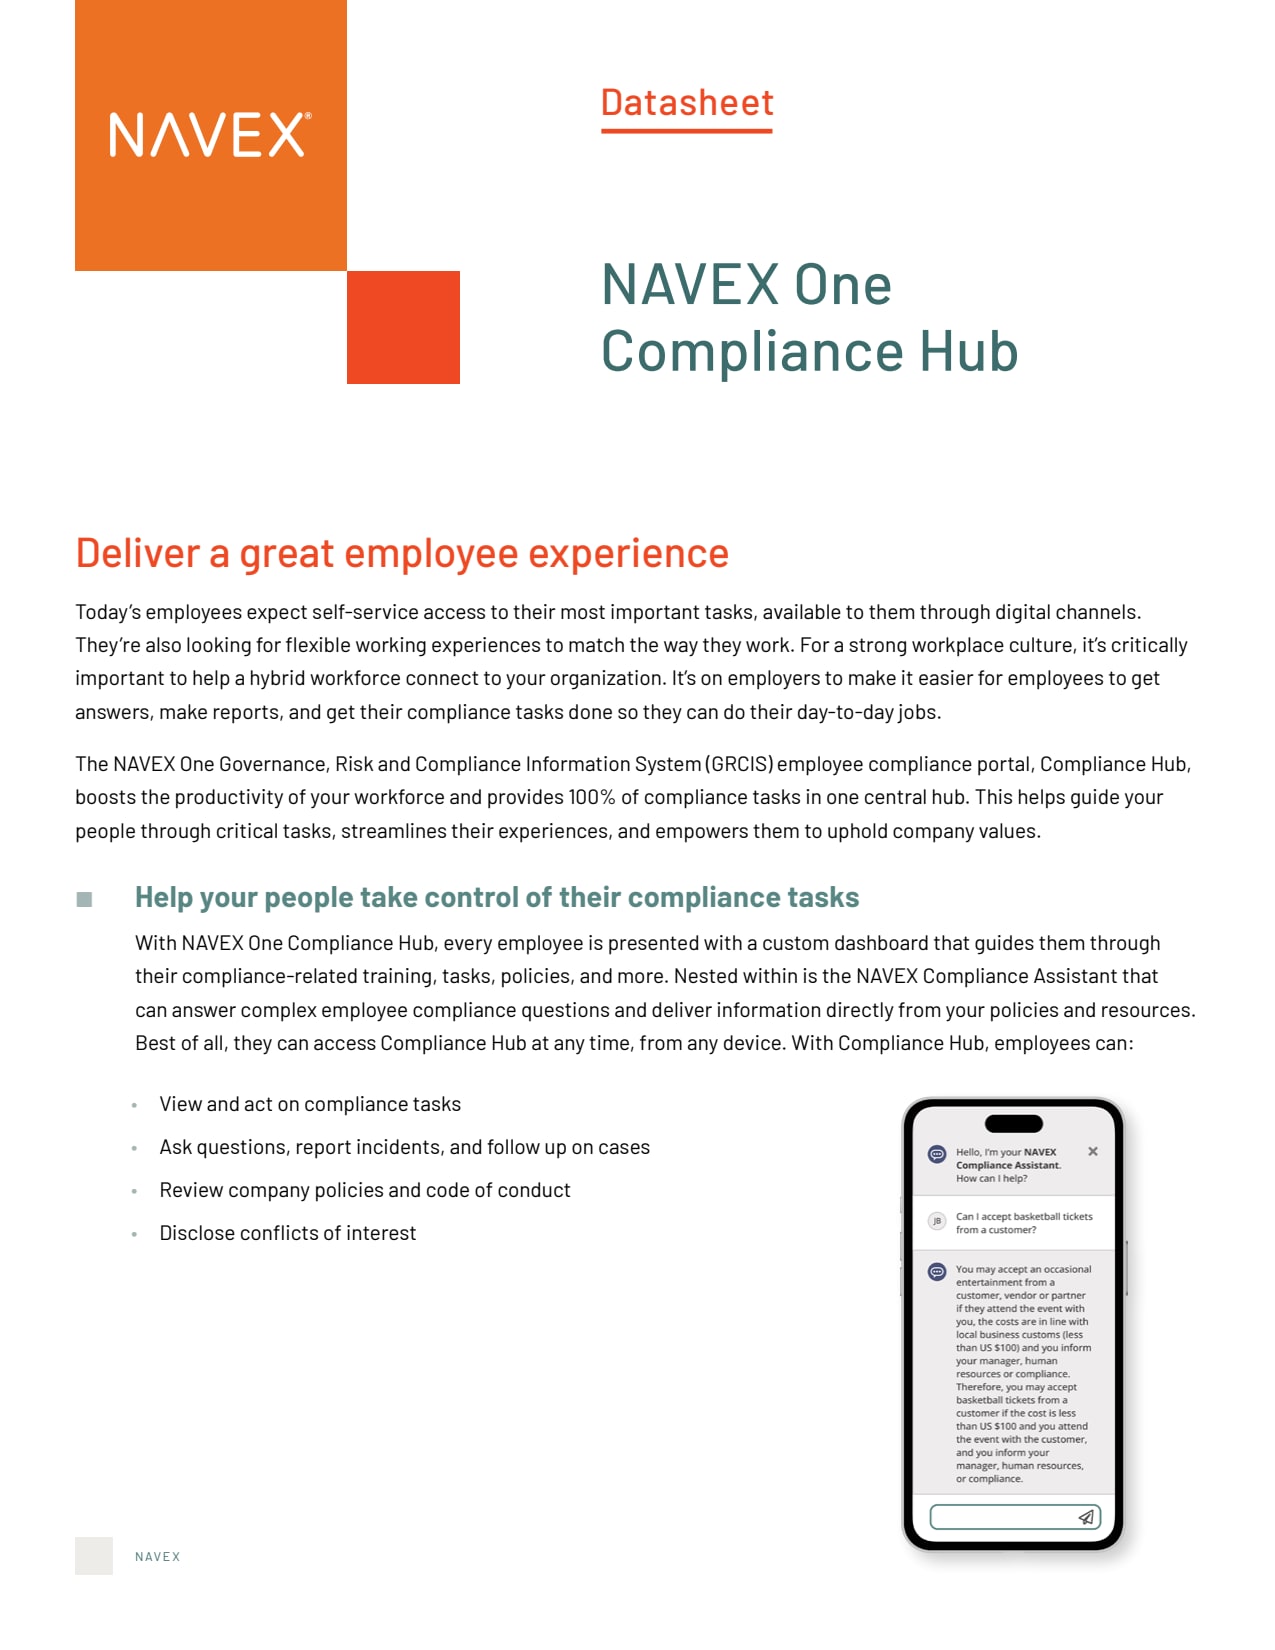 NAVEX One Compliance Hub